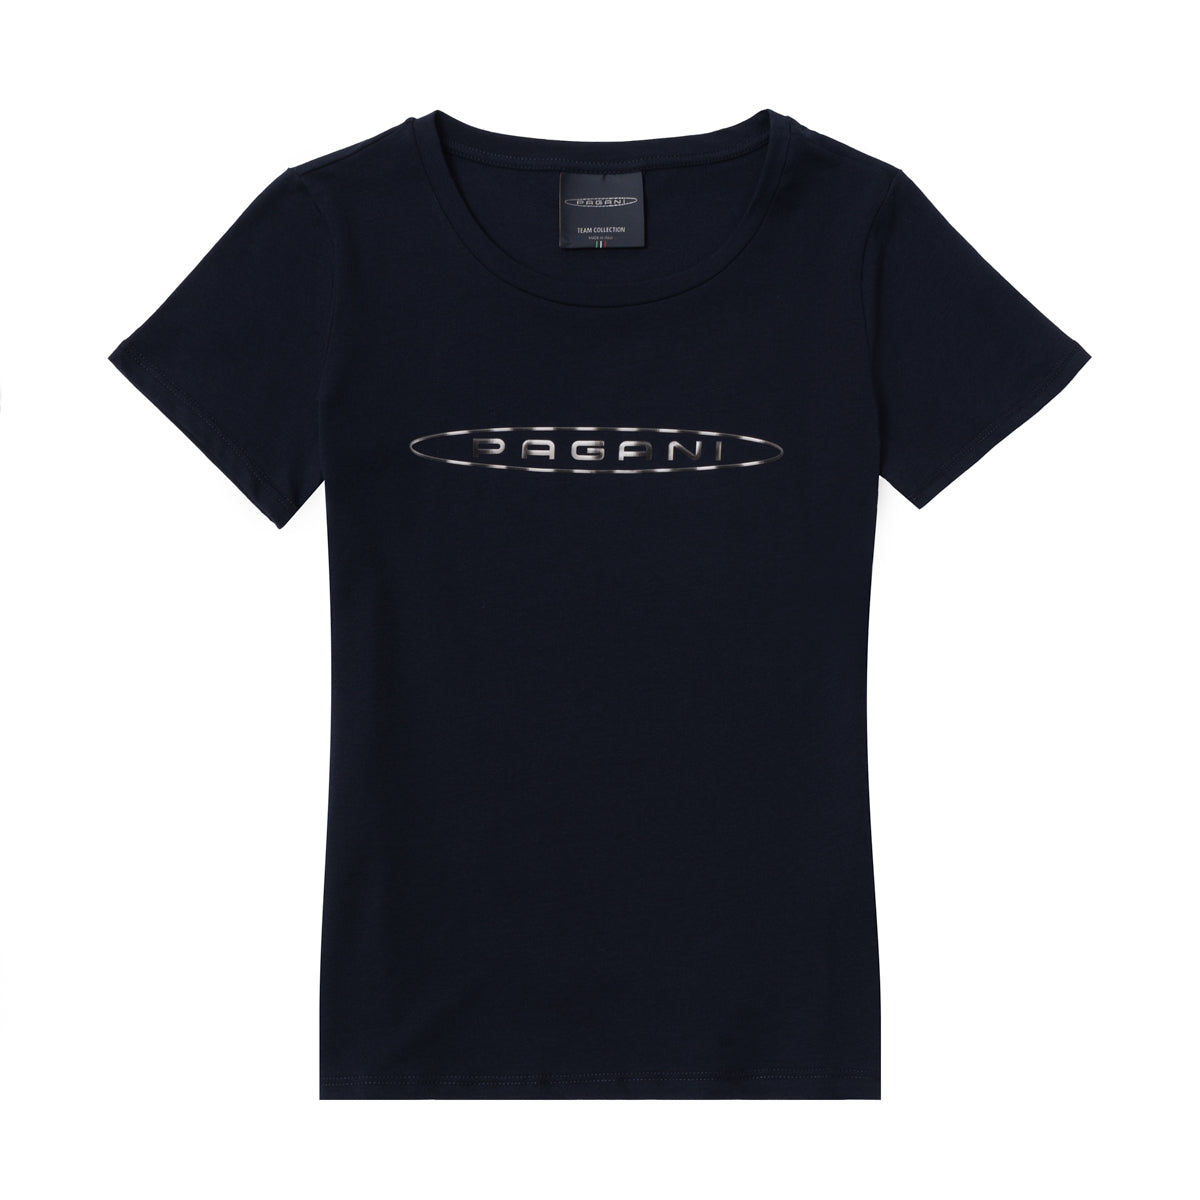 Camiseta básica para mujer azul | Team Collection